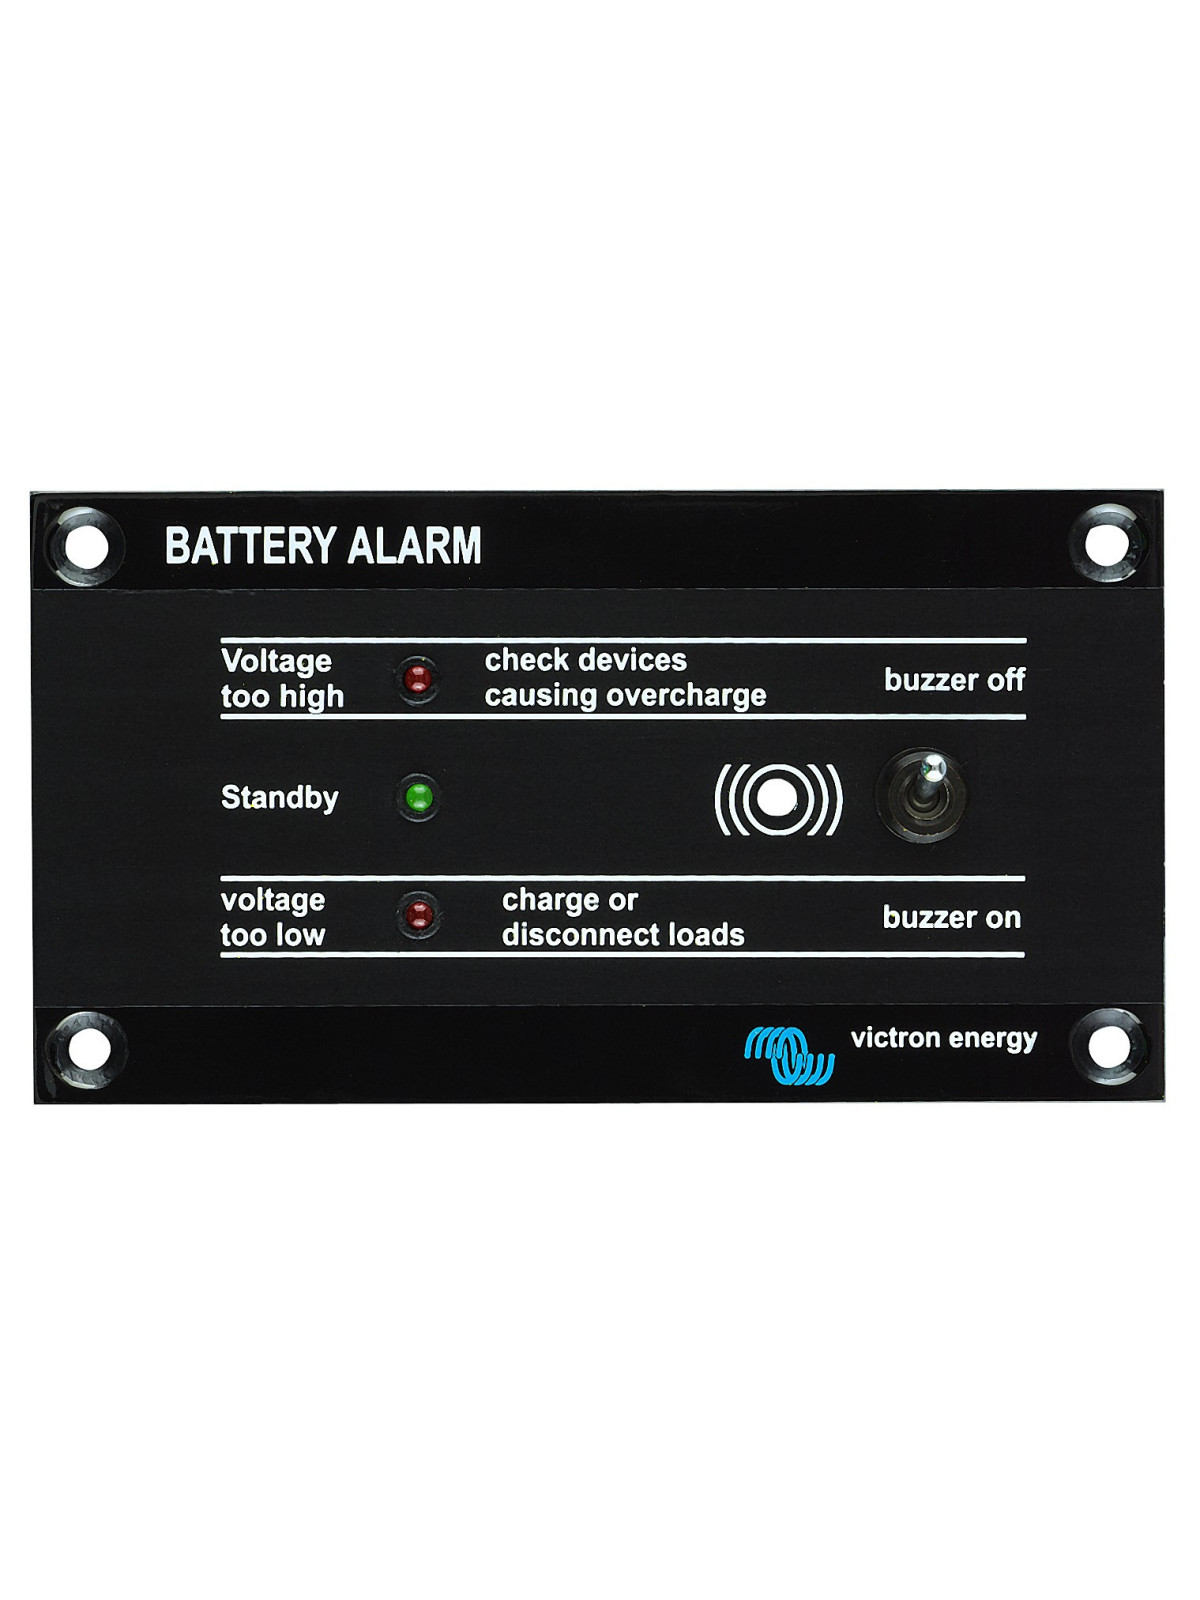 Victron GX batterij alarm